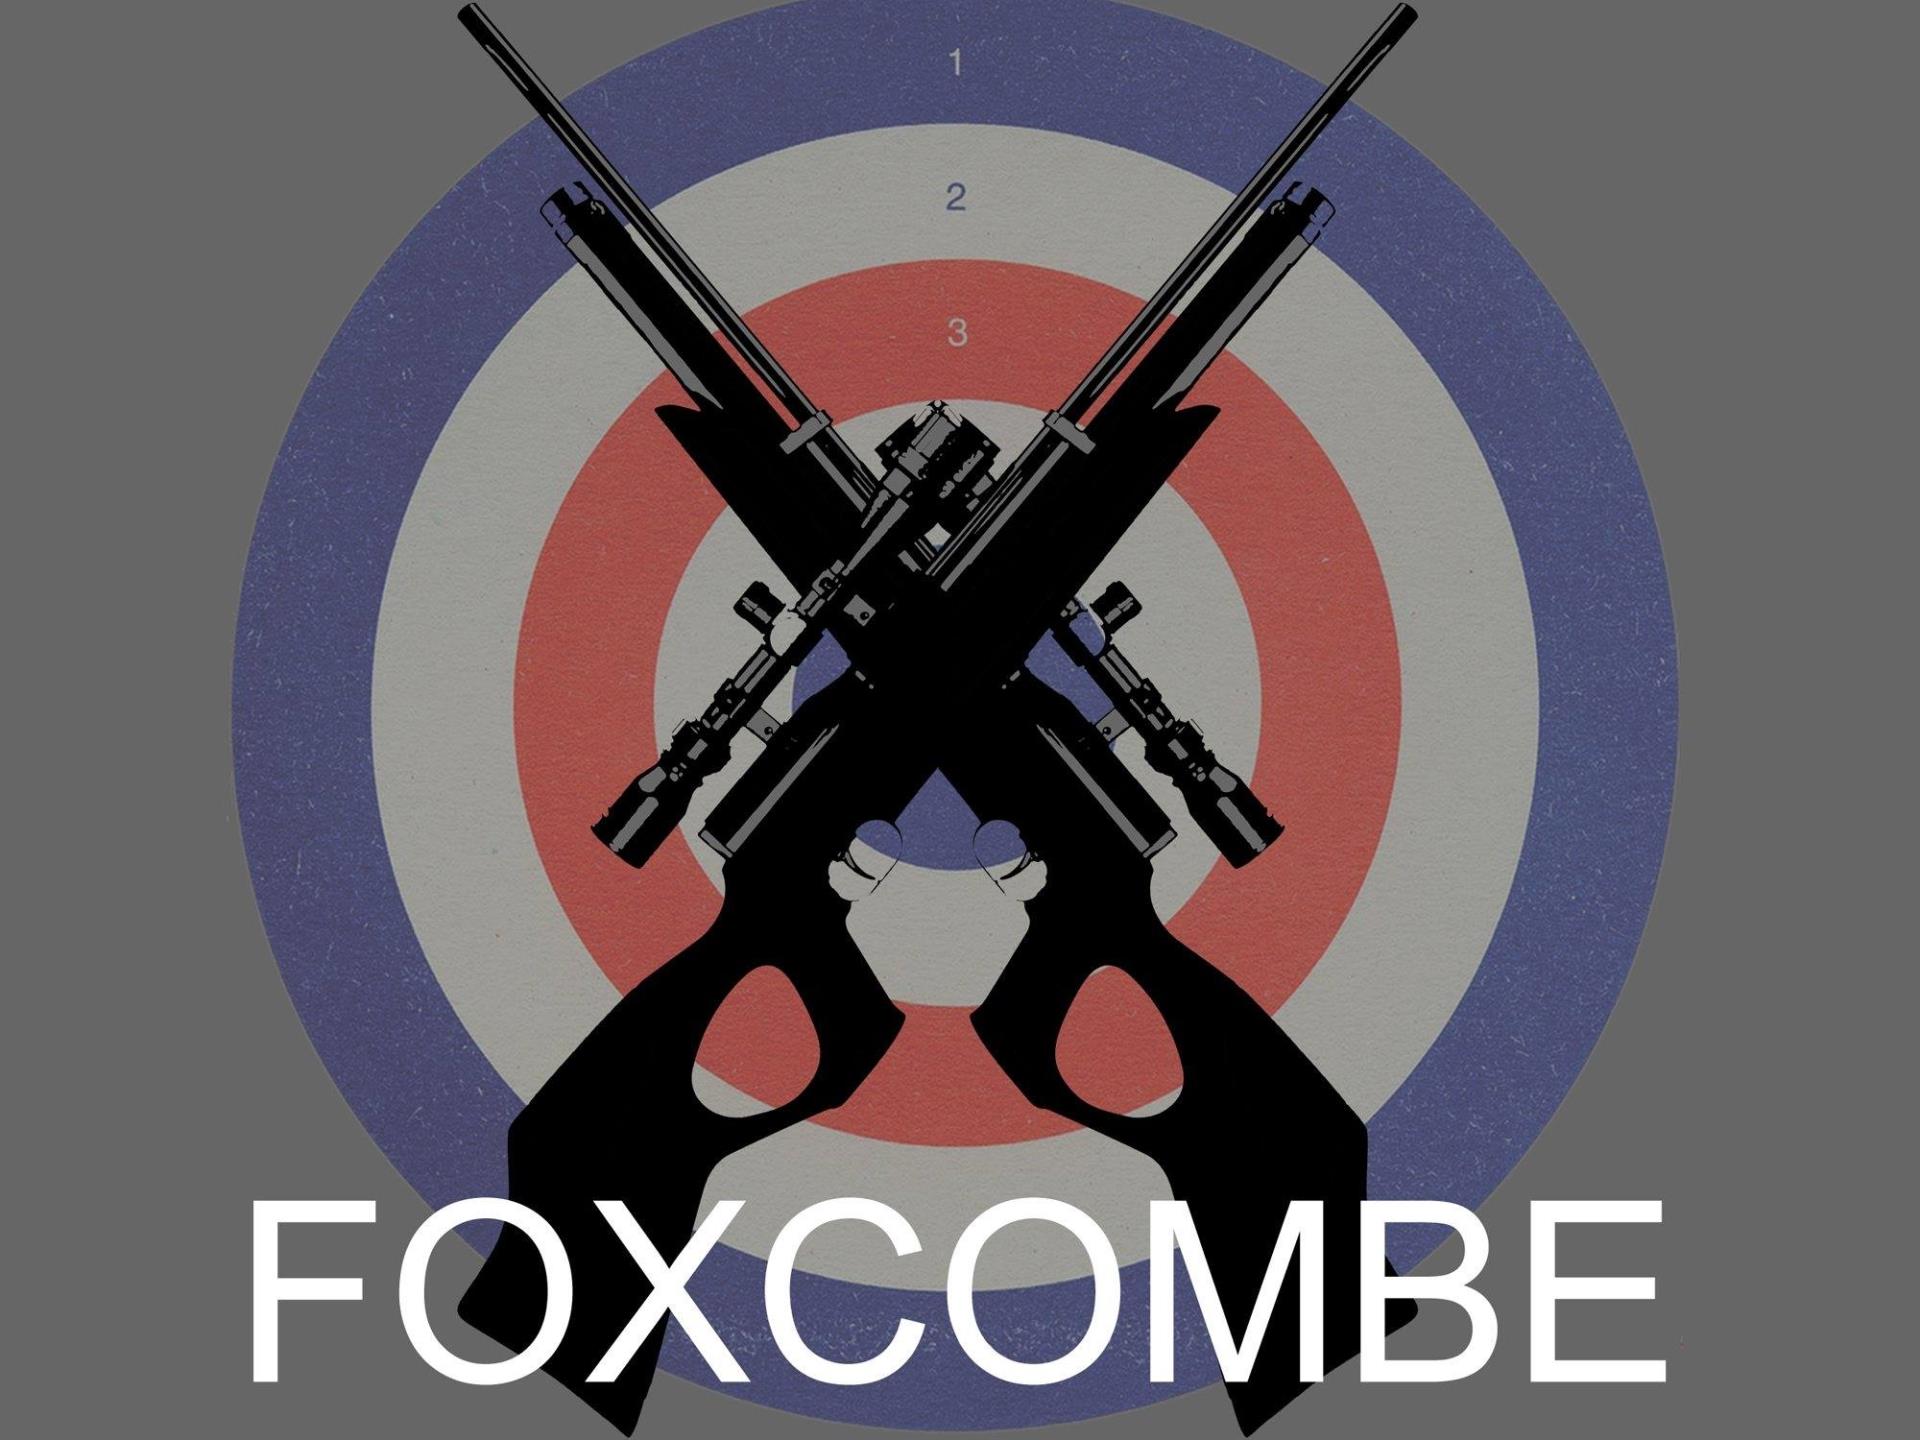 Foxcombe Air Rifle and Pistol Shooting Range